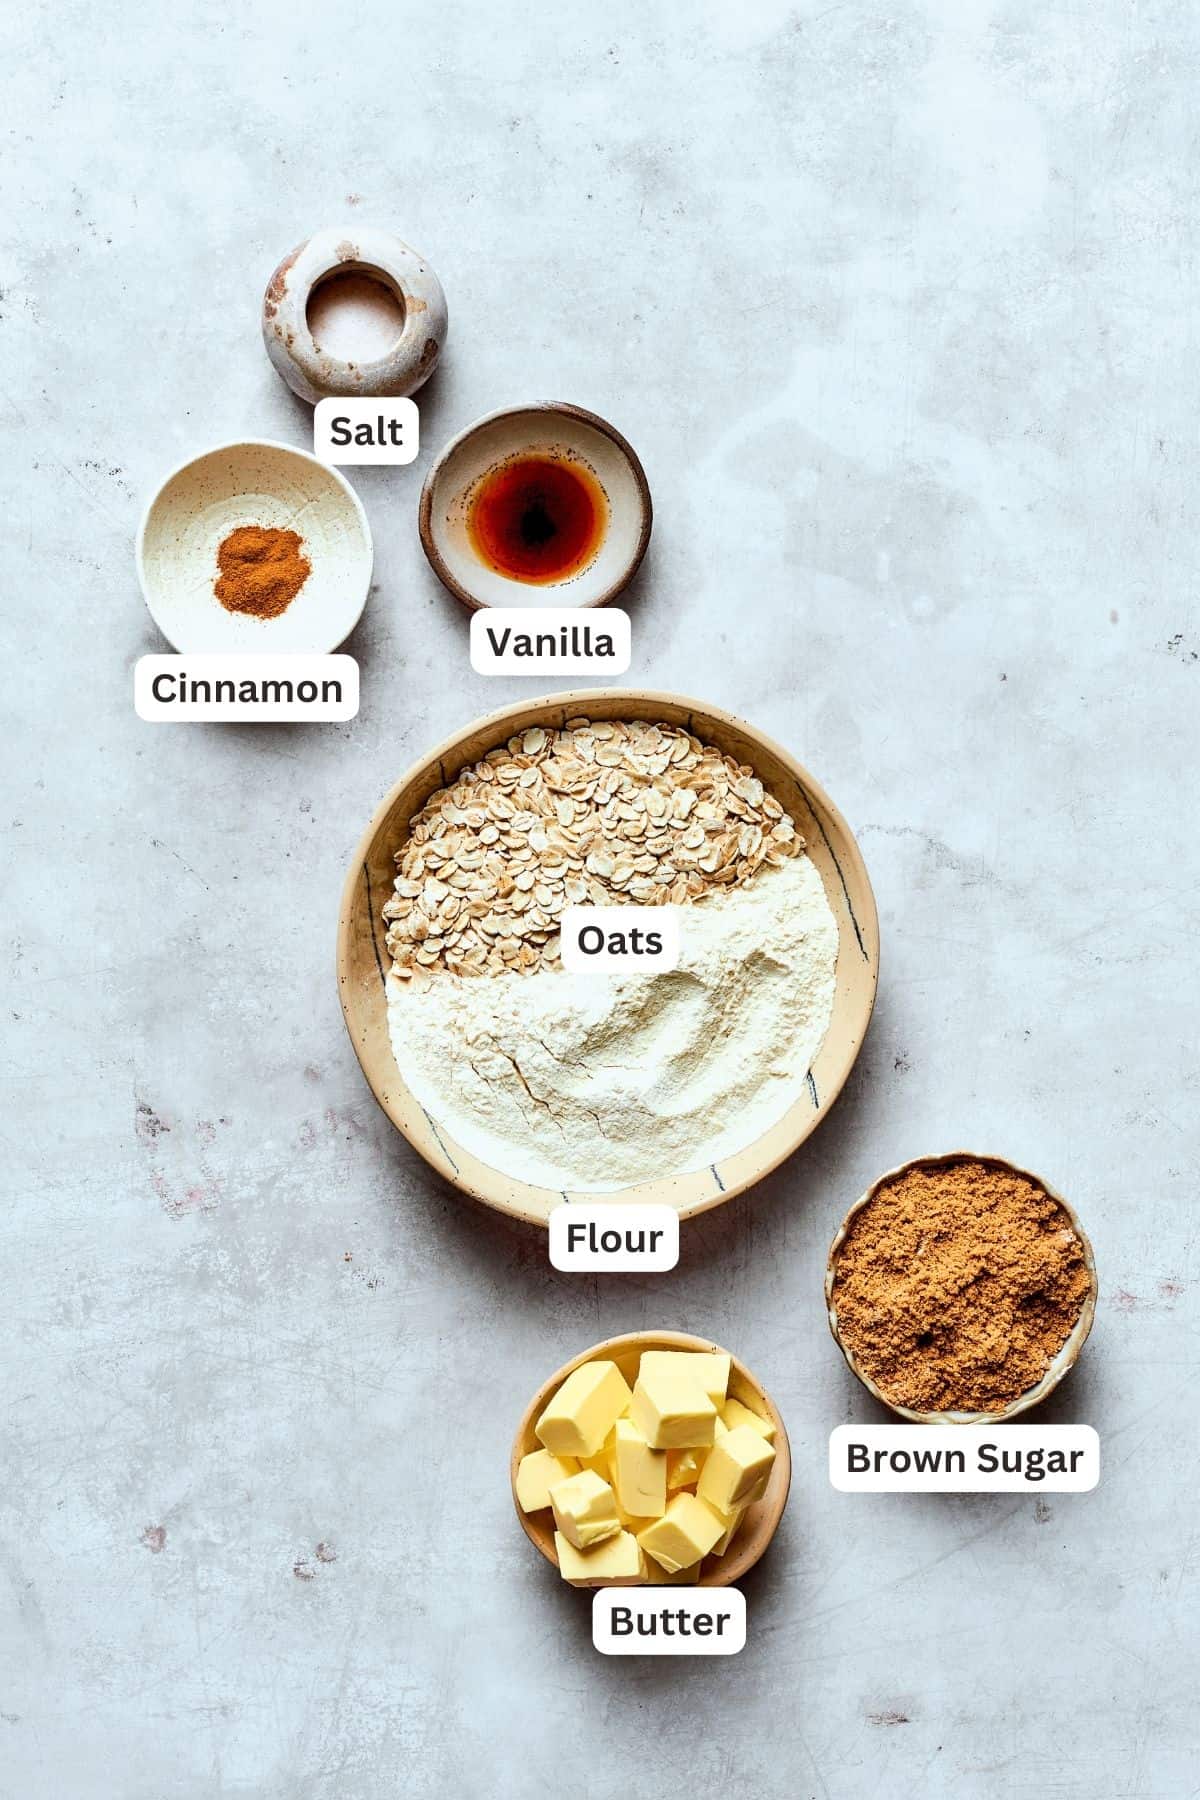 Blueberry crisp topping ingredients are shown labeled: cinnamon, vanbilla, salt, flour, oats, butter, brown sugar.